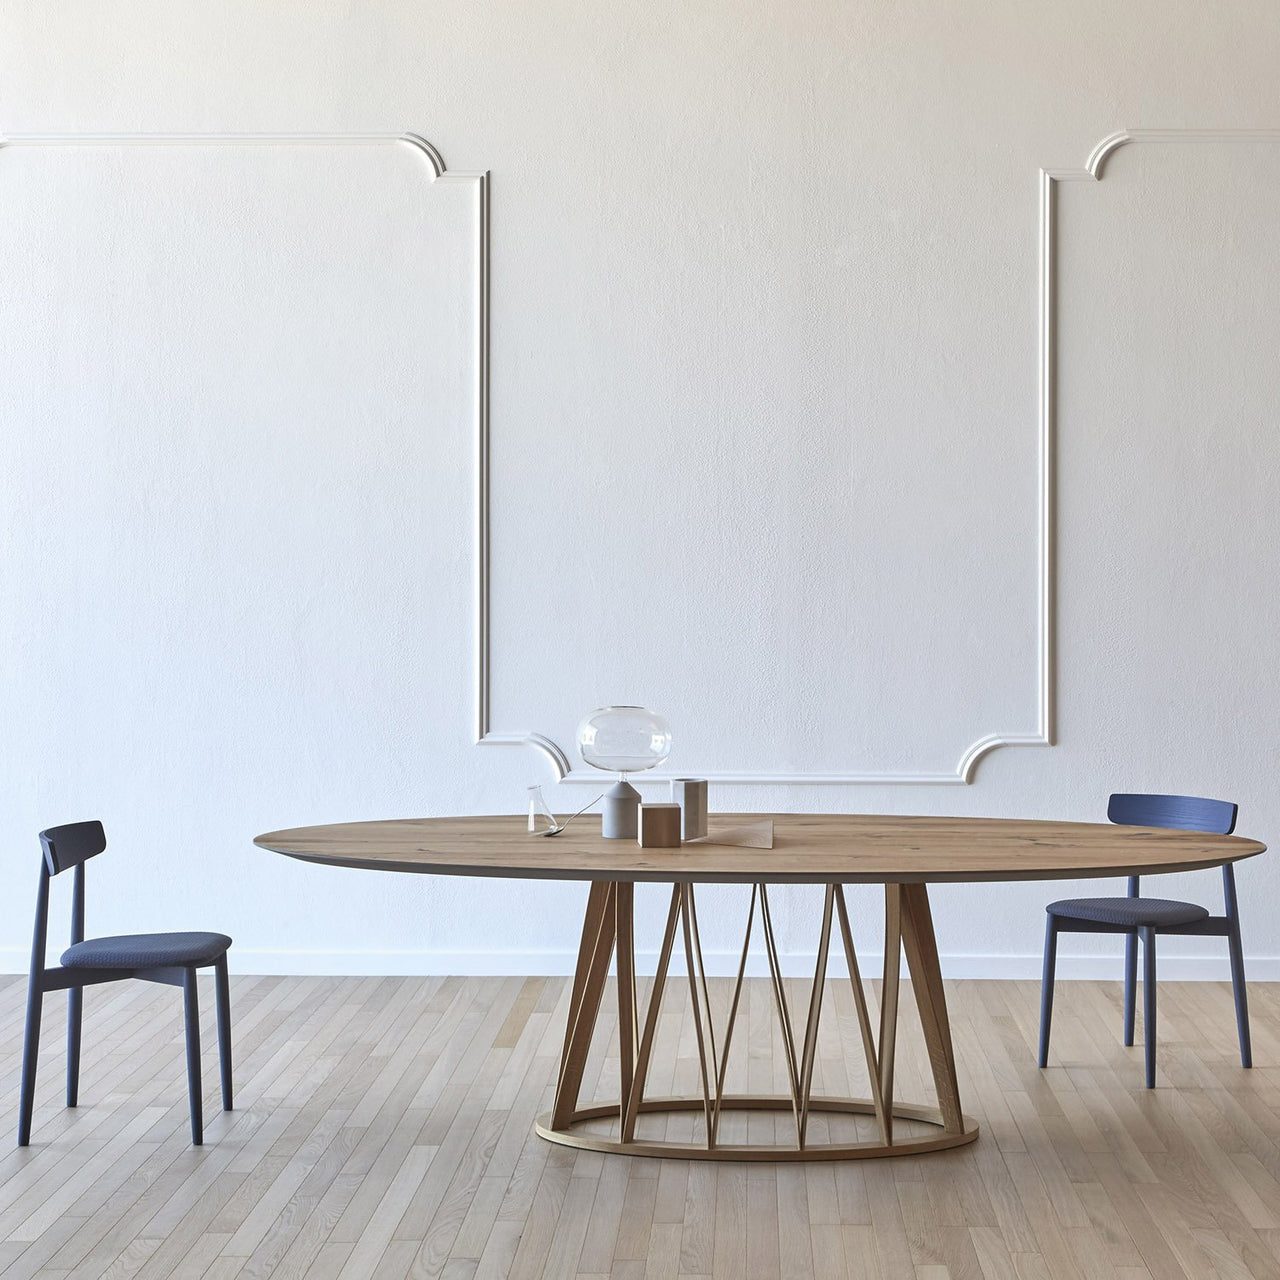 Acco Oval Dining Table: Medium